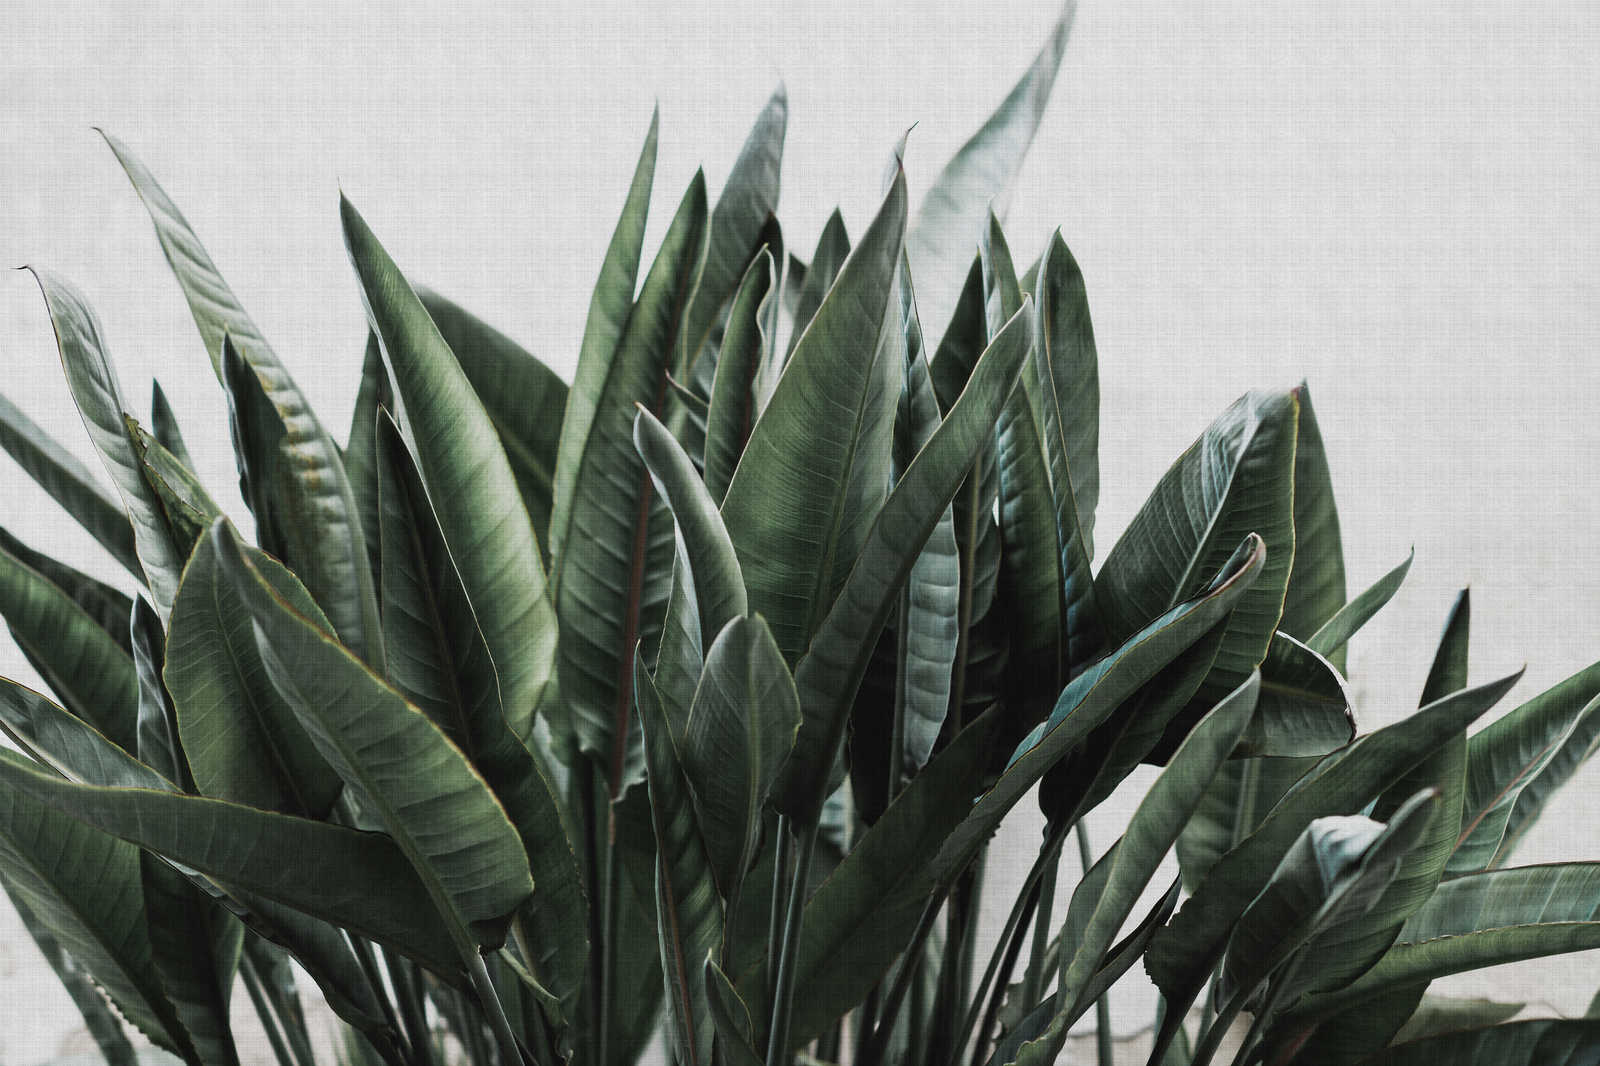             Urban jungle 2 - Palm leaves canvas picture, natural linen structure exotic plants - 1.20 m x 0.80 m
        